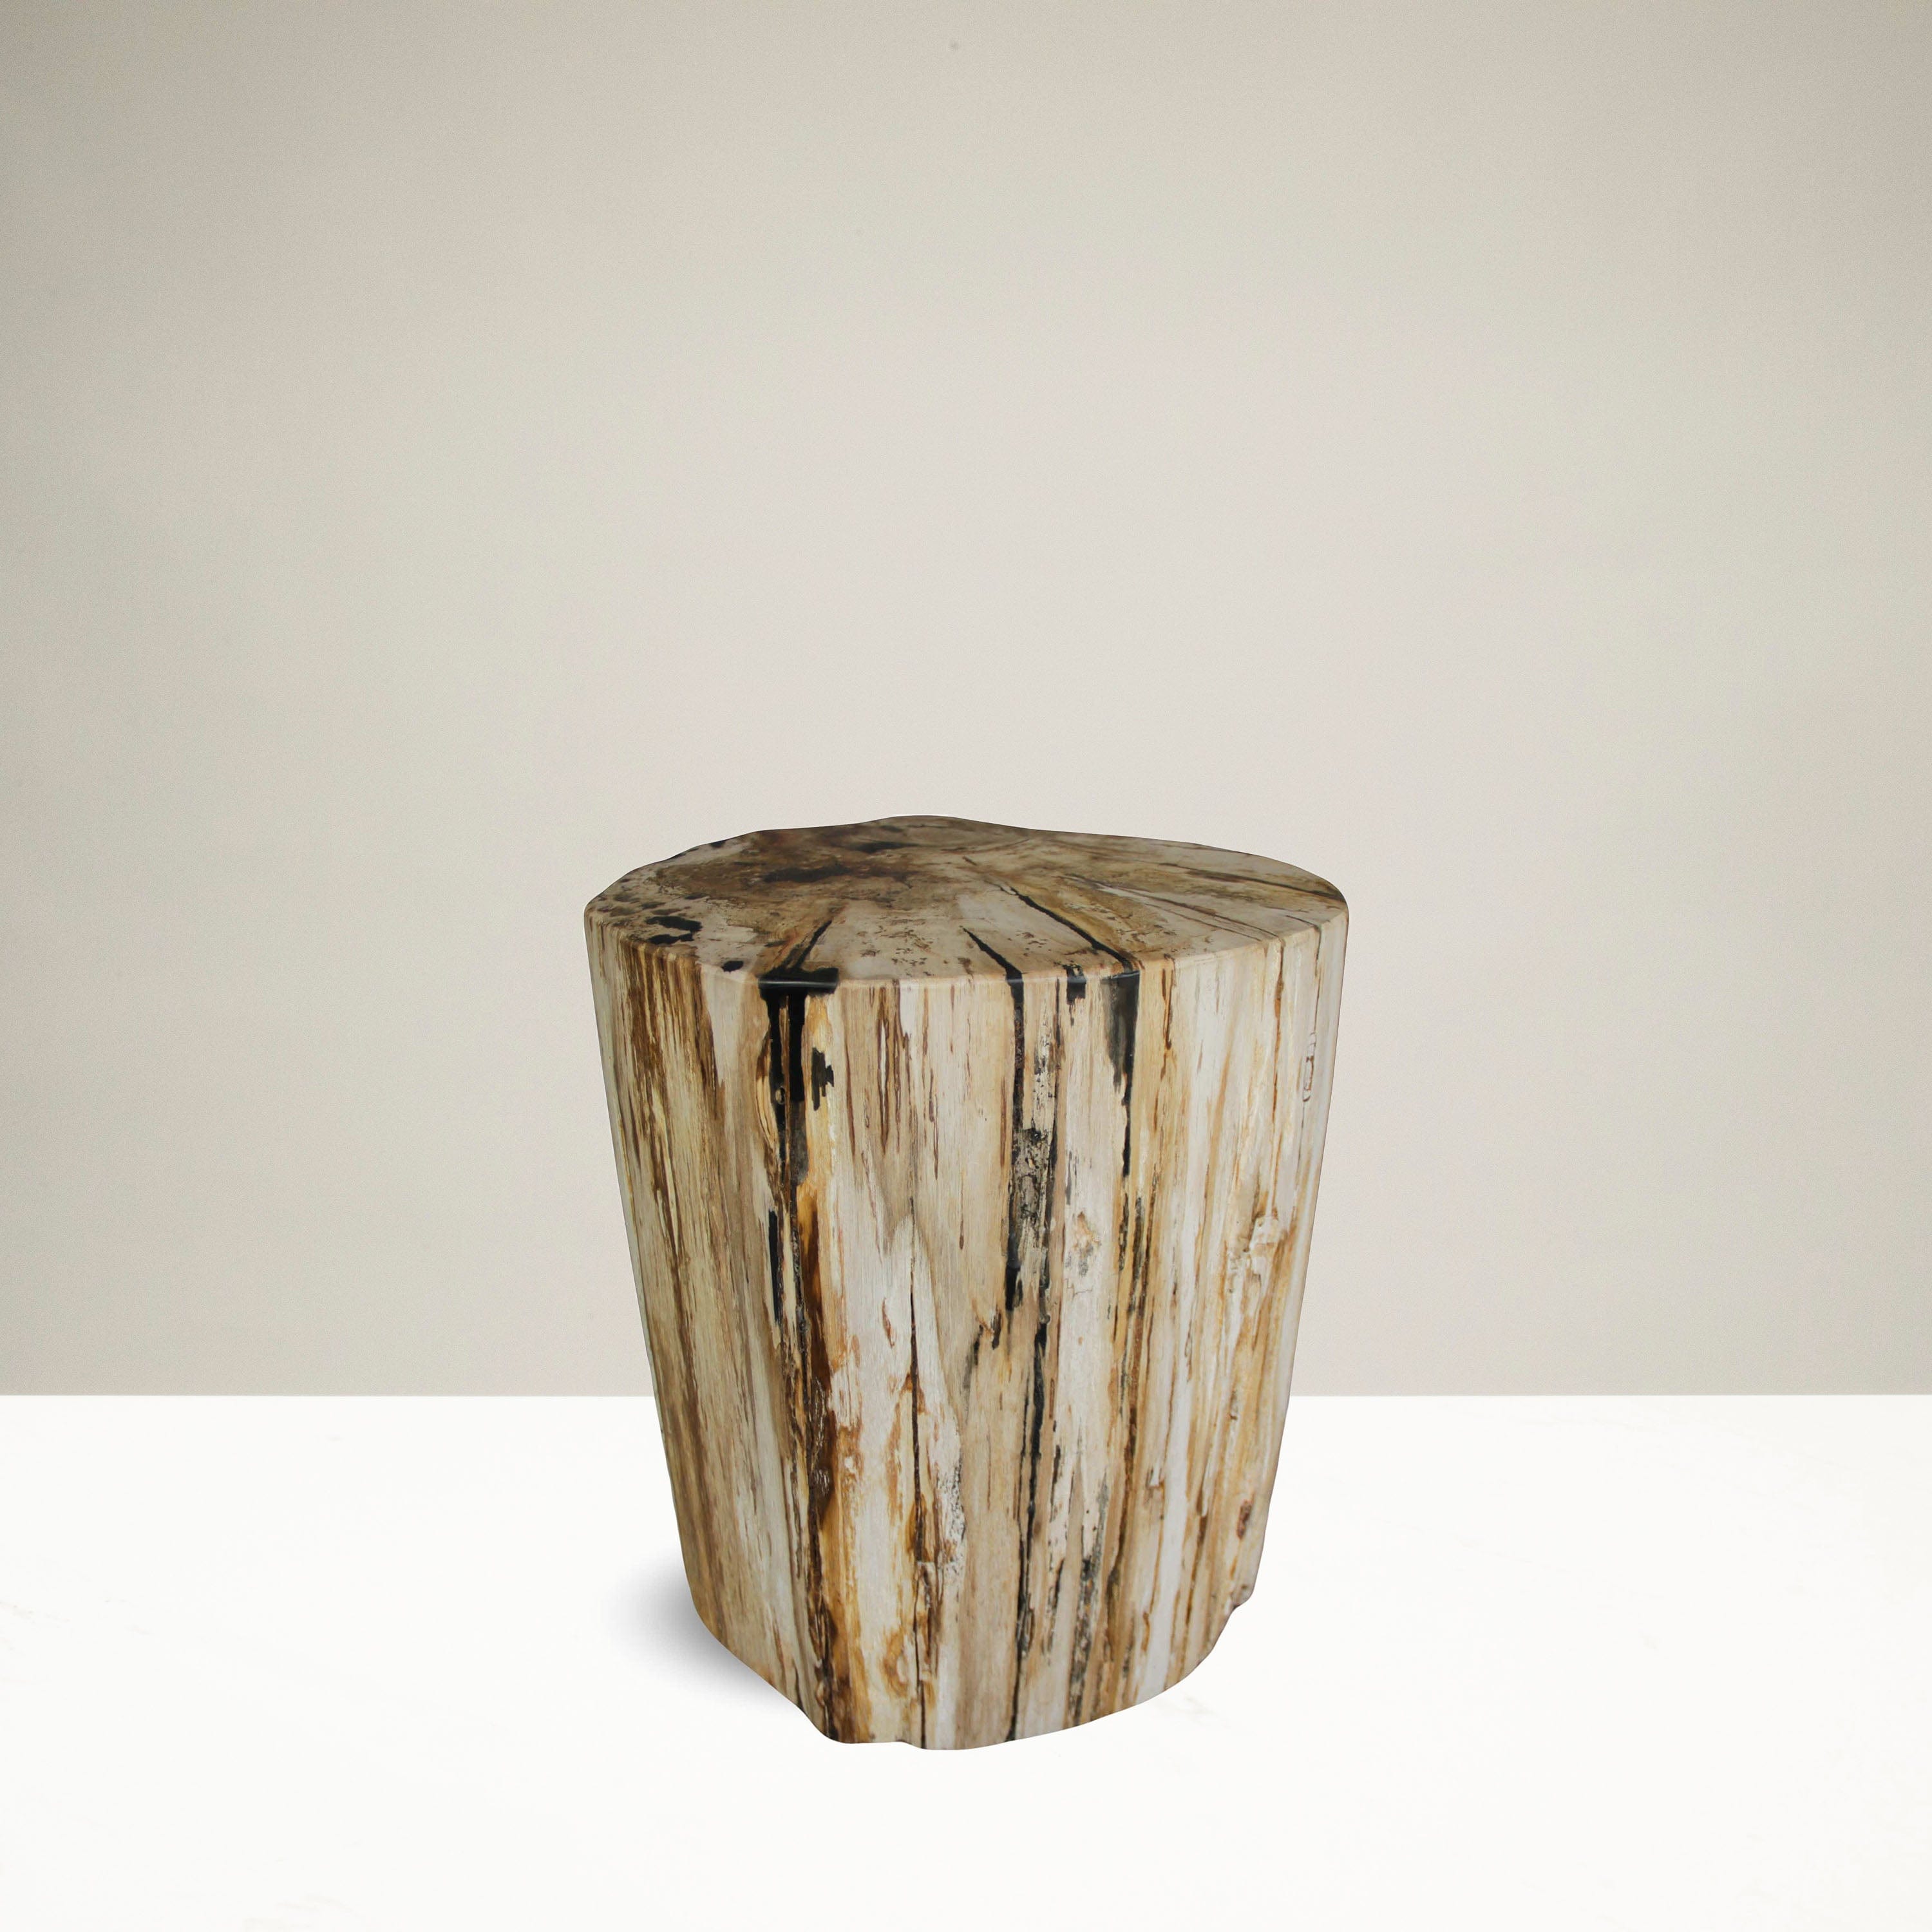 Kalifano Petrified Wood Petrified Wood Round Stump / Stool from Indonesia - 16" / 233 lbs PWS4400.010